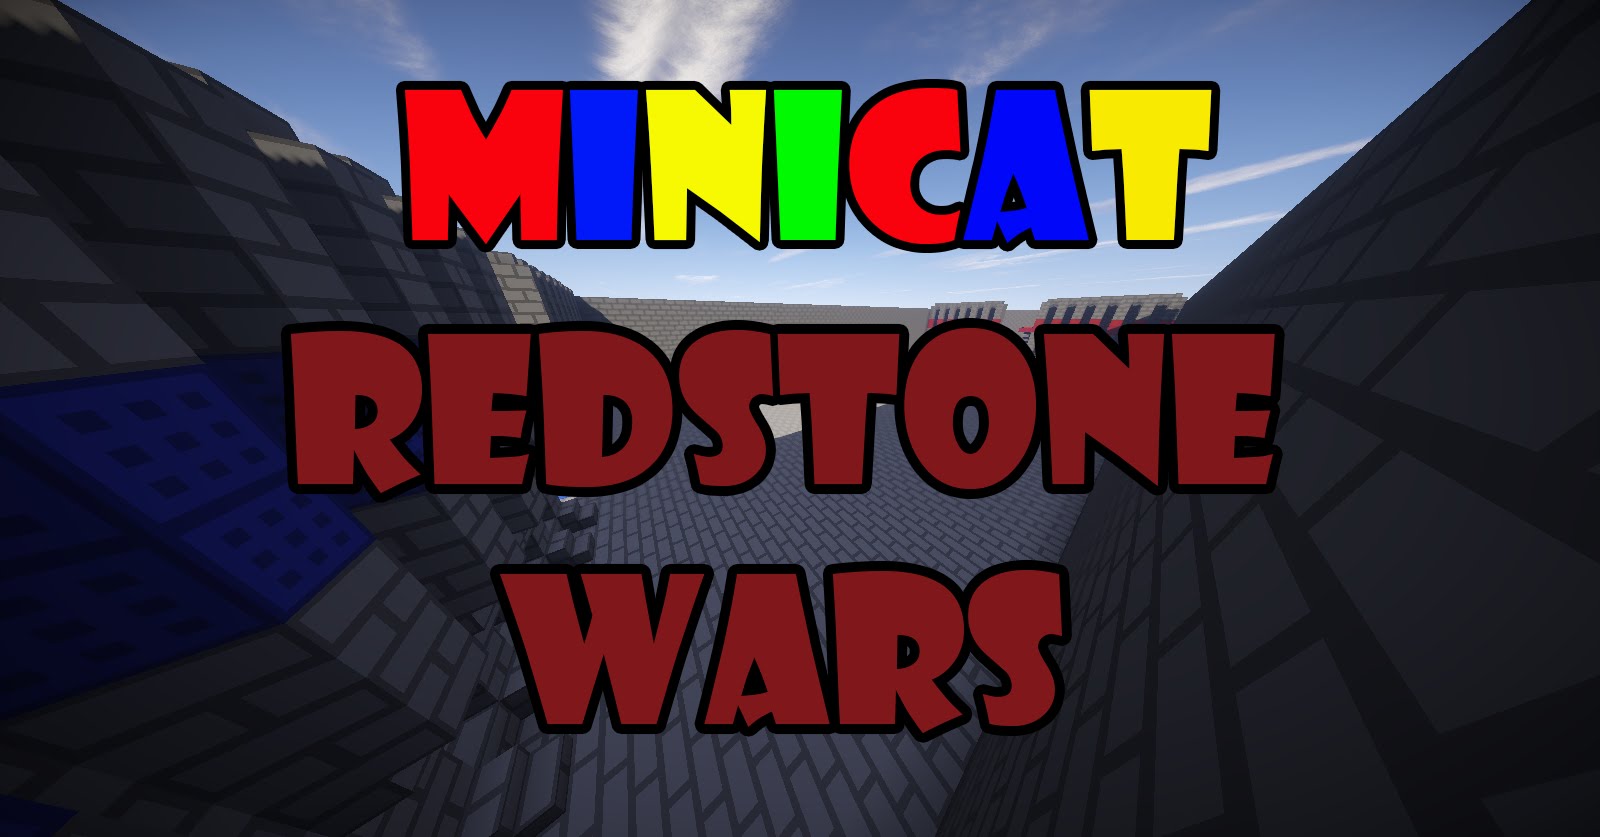 MiniCat - Partidaca a RedstoneWars! de Onyx330